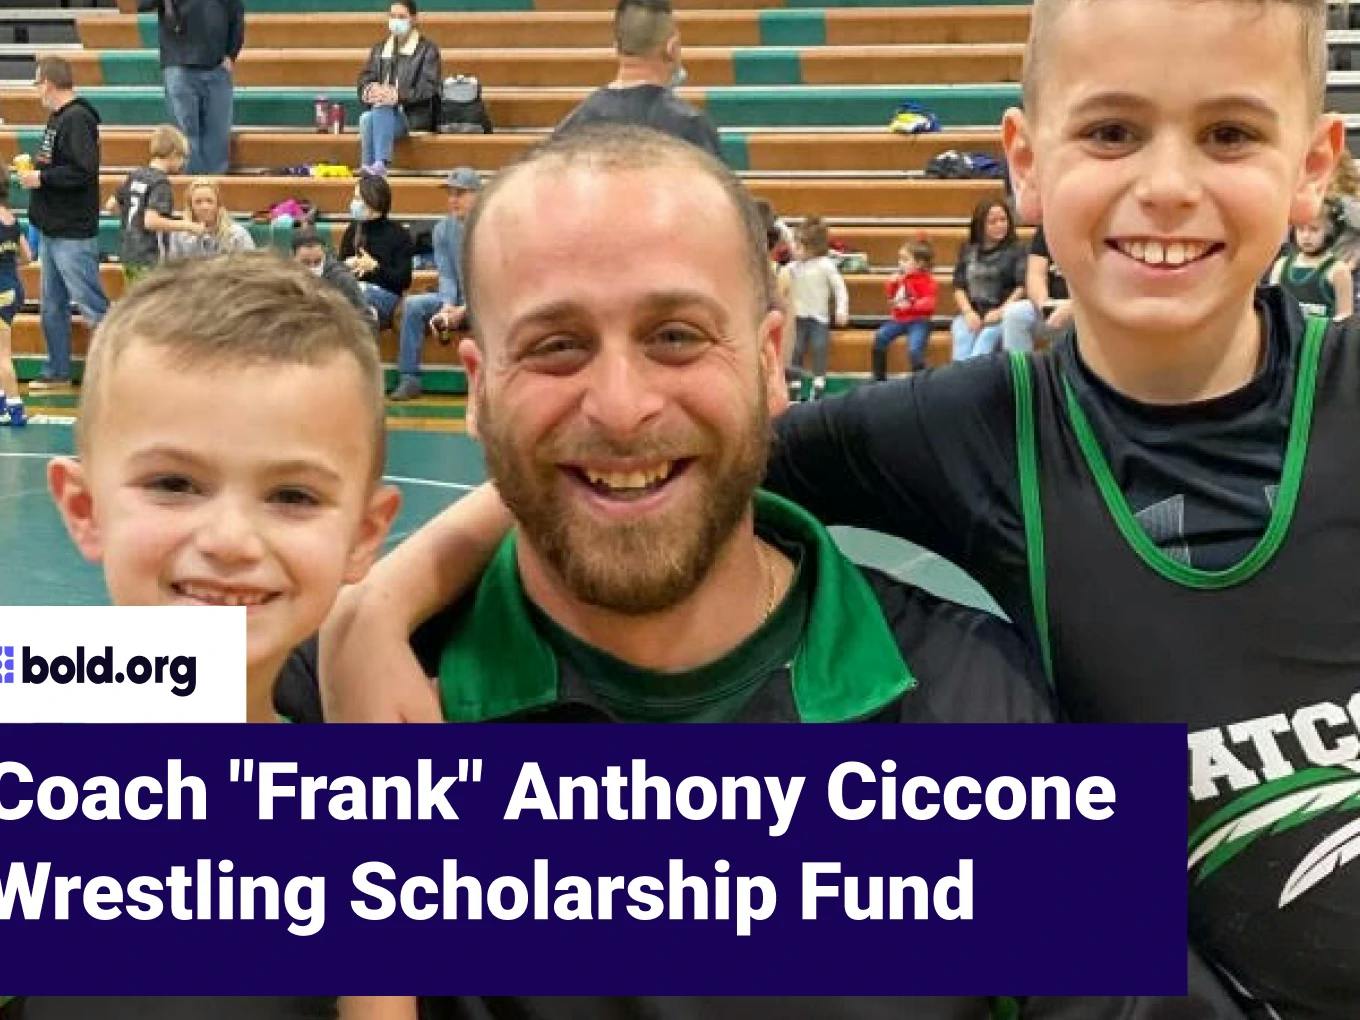 Coach "Frank" Anthony Ciccone Wrestling Scholarship Fund